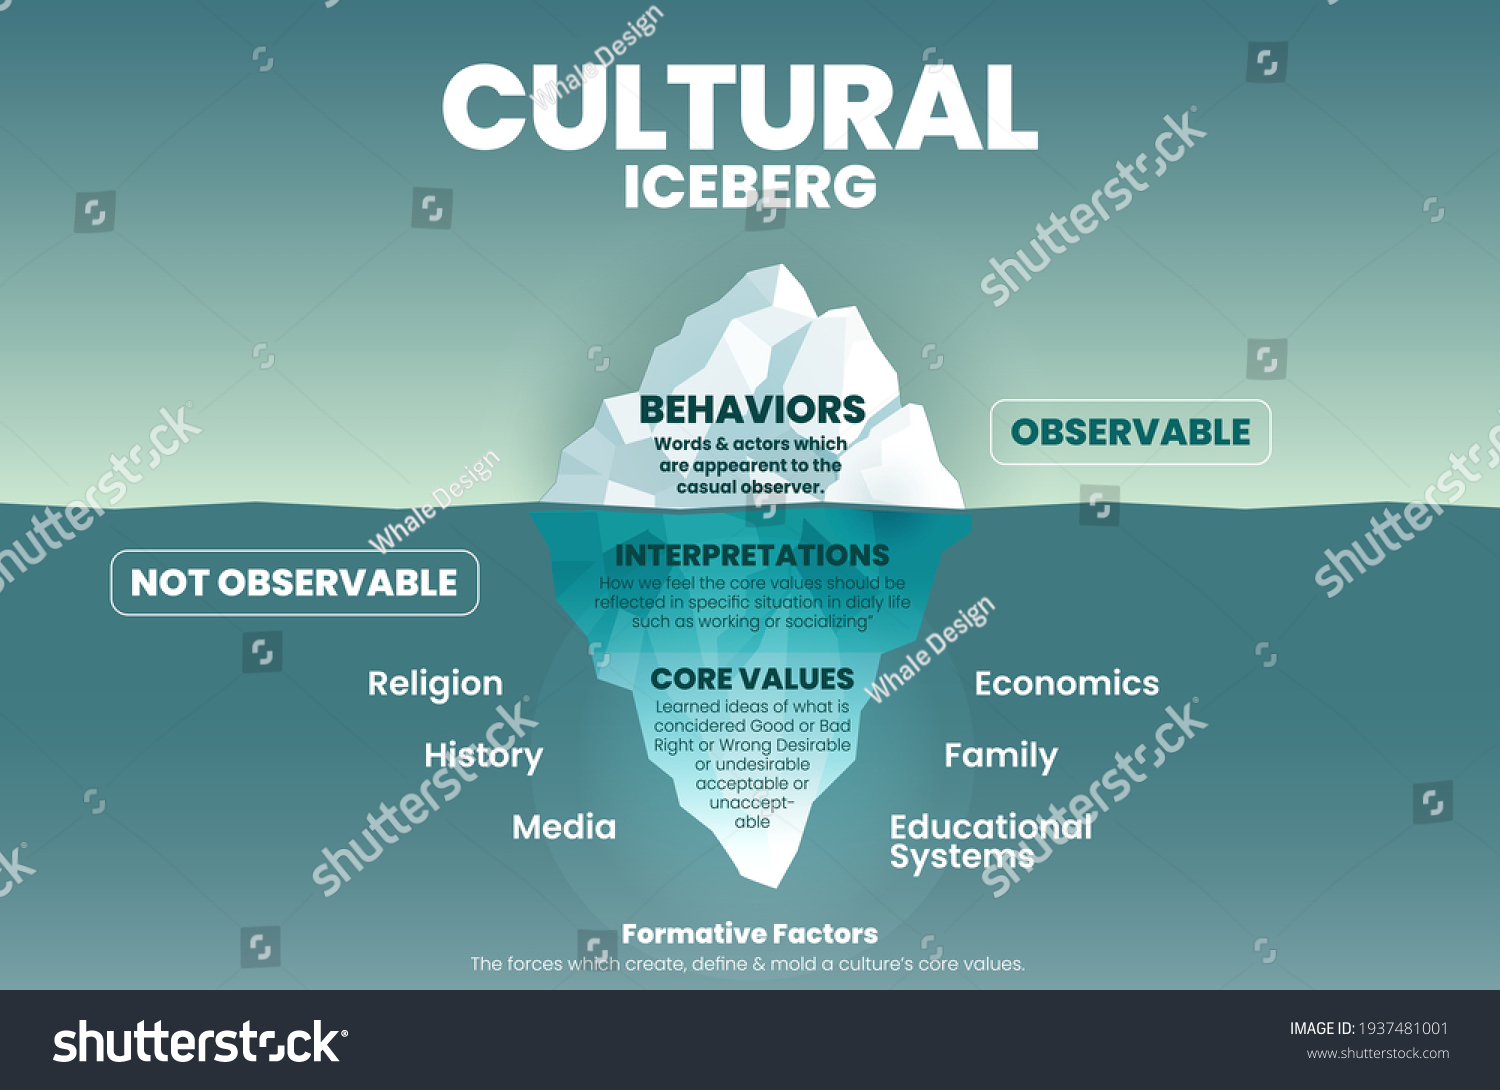 Cultural Behavior Iceberg Template On Surface Stock Vector (Royalty ...